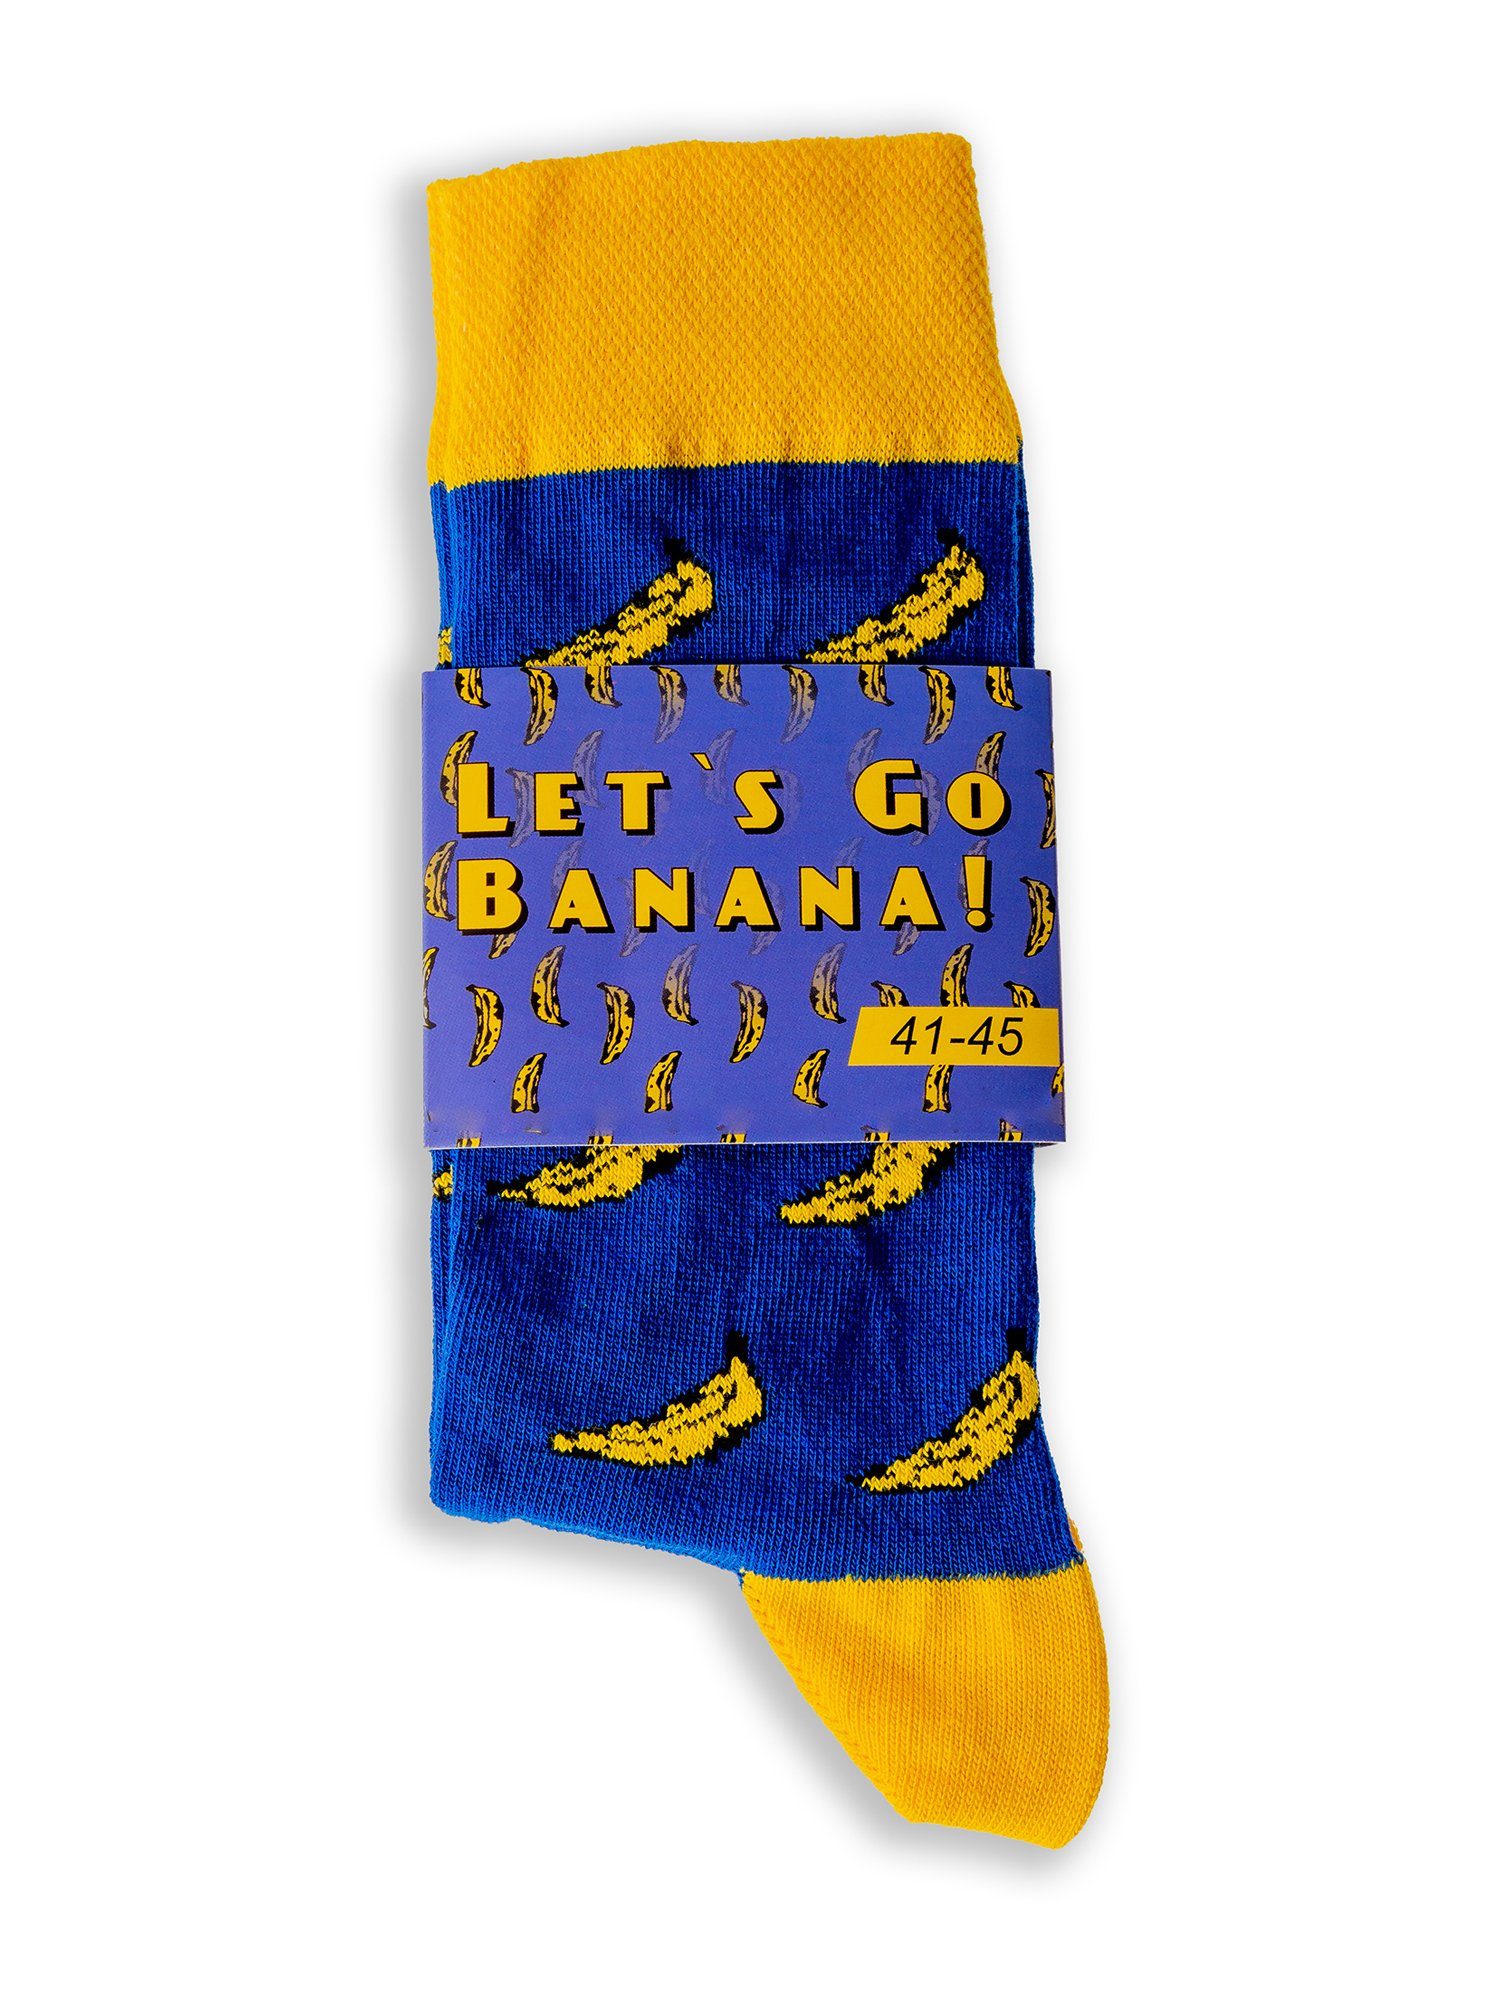 Leisure Banana Chili Freizeitsocken Socks Banderole Lifestyle